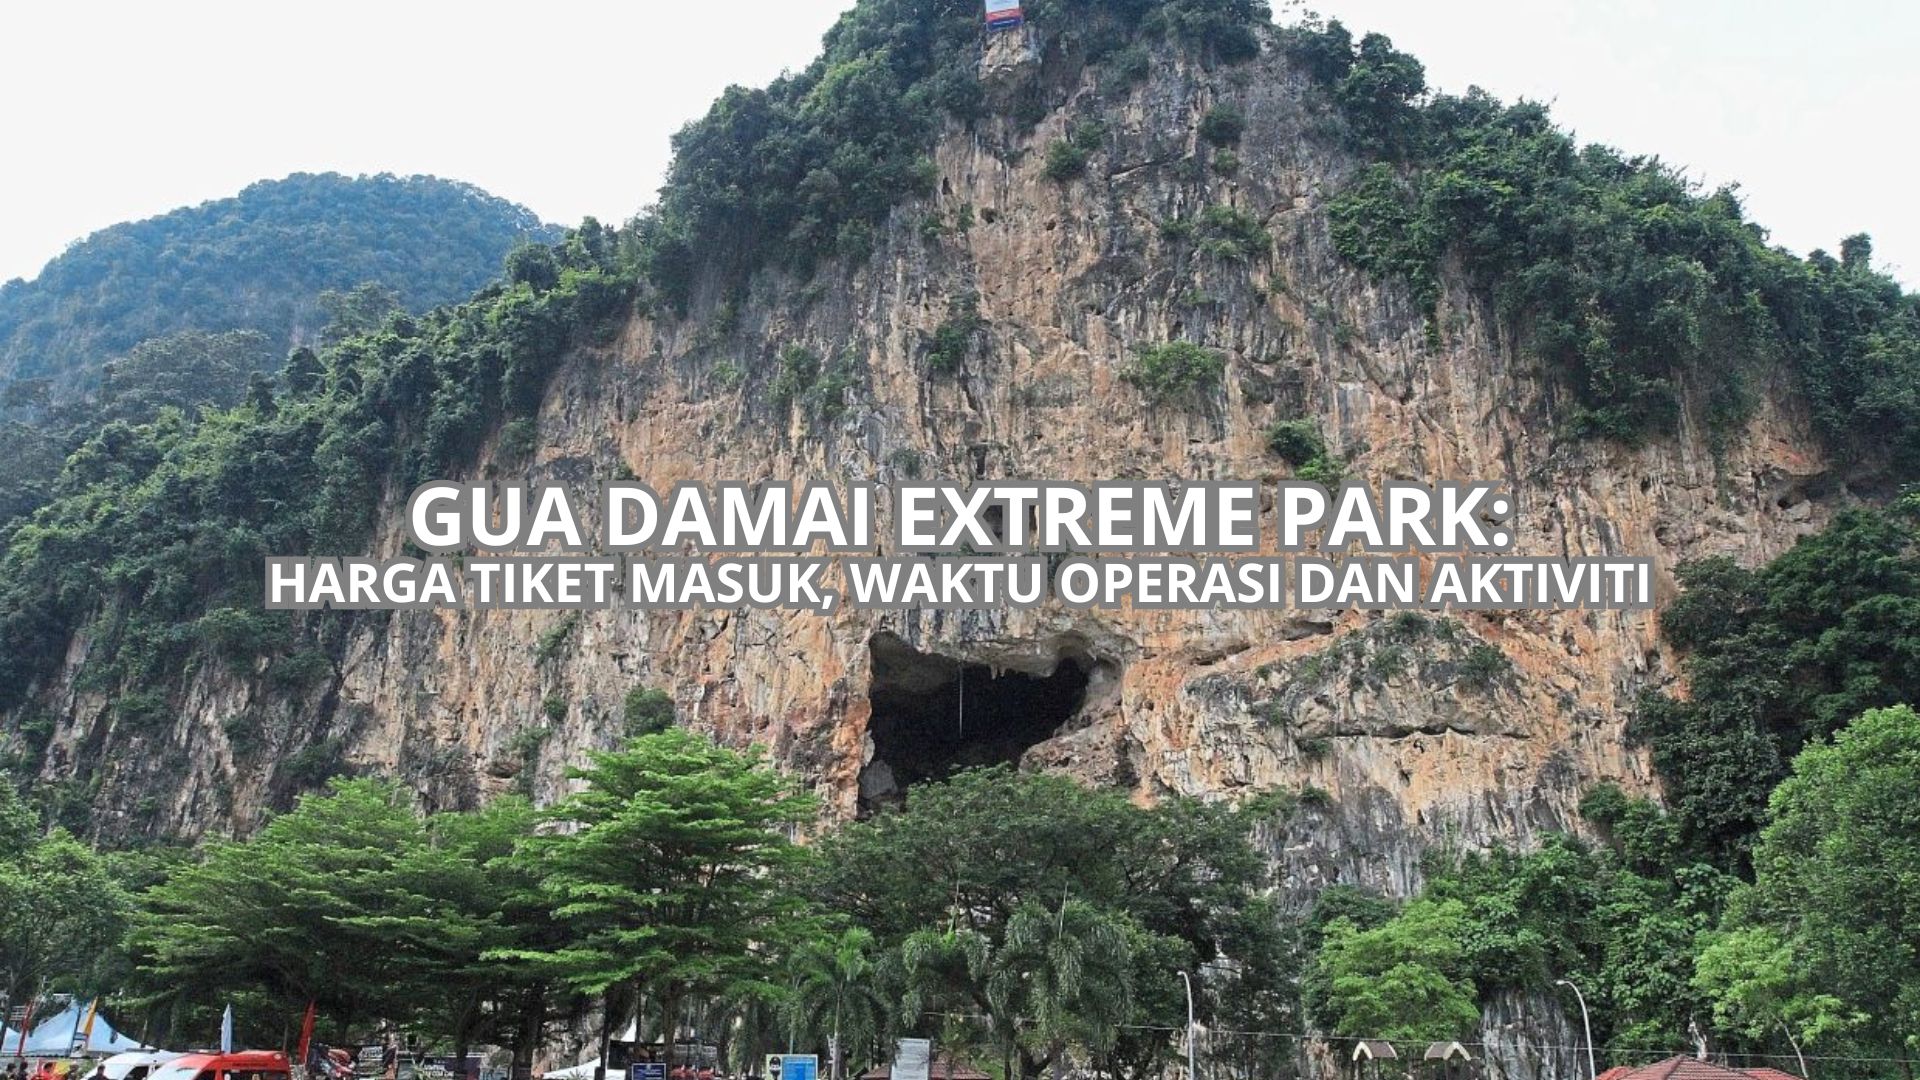 Gua Damai Extreme Park Cover